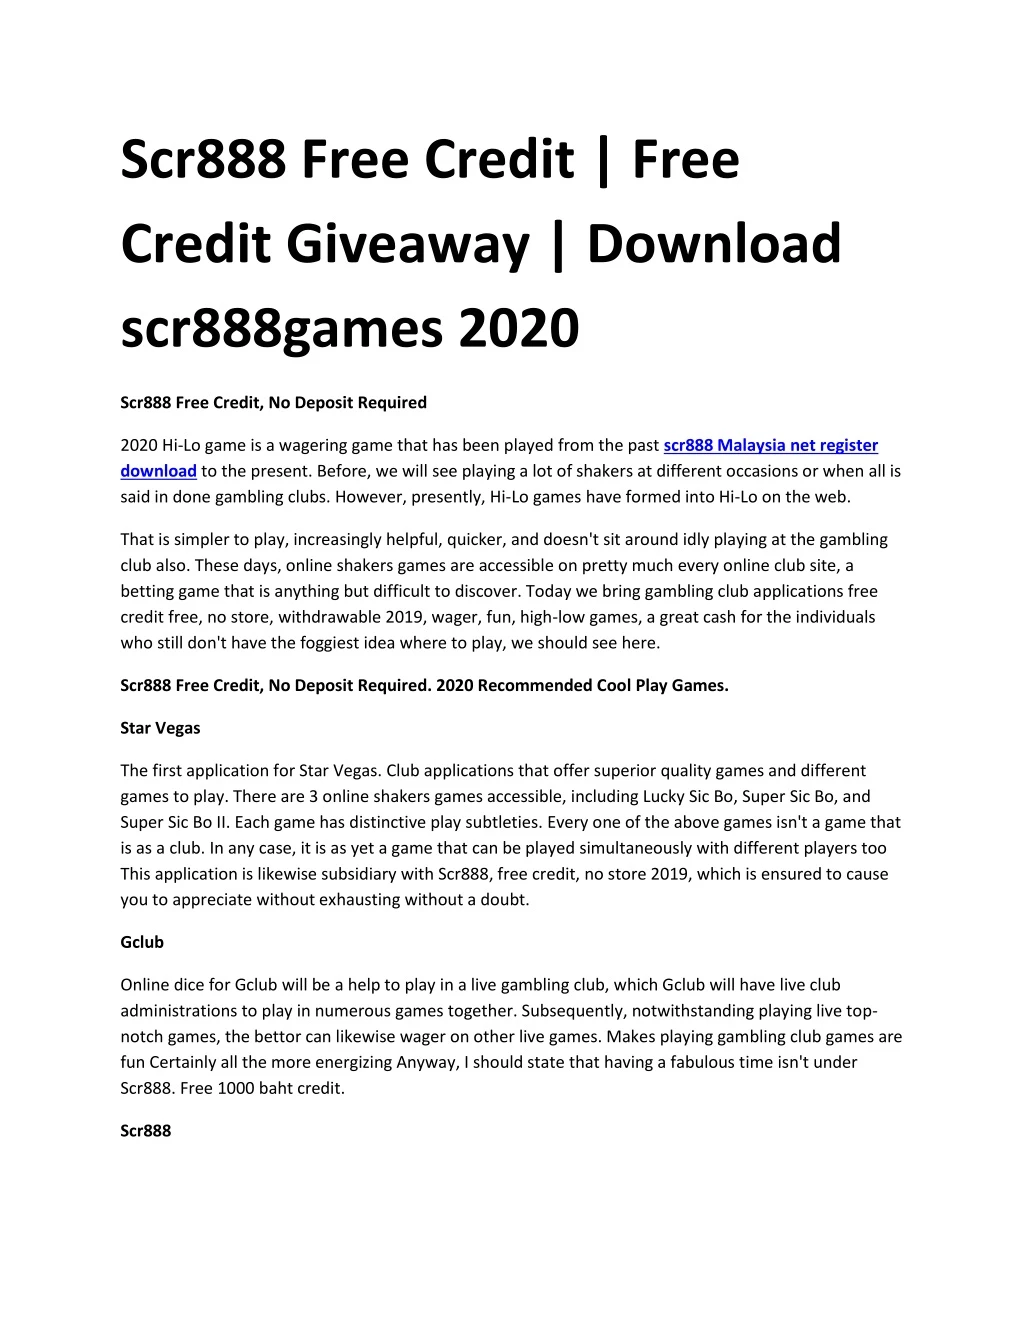 scr888 free credit free credit giveaway download